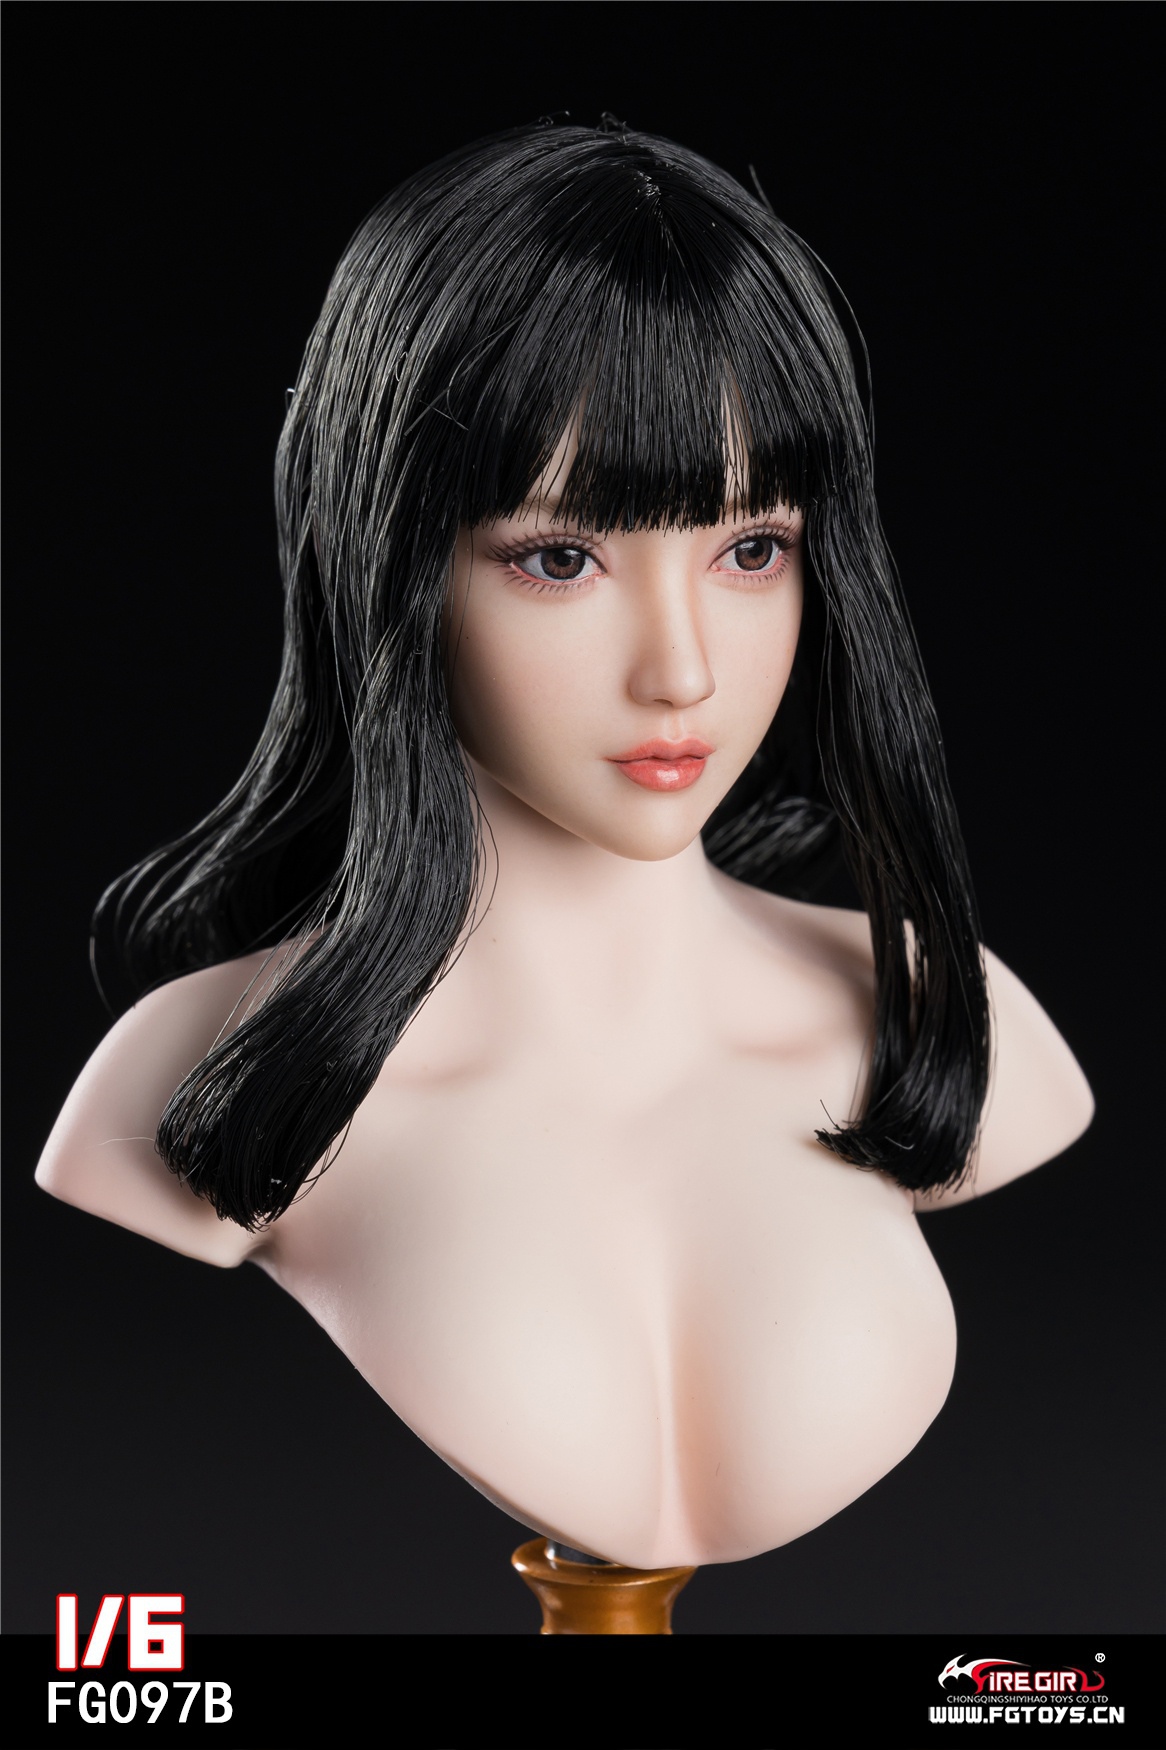 Female - NEW PRODUCT: Fire Girl Toys: Asian Girl Head Sculpture (FG097A/FG097B/FG097C) 1173